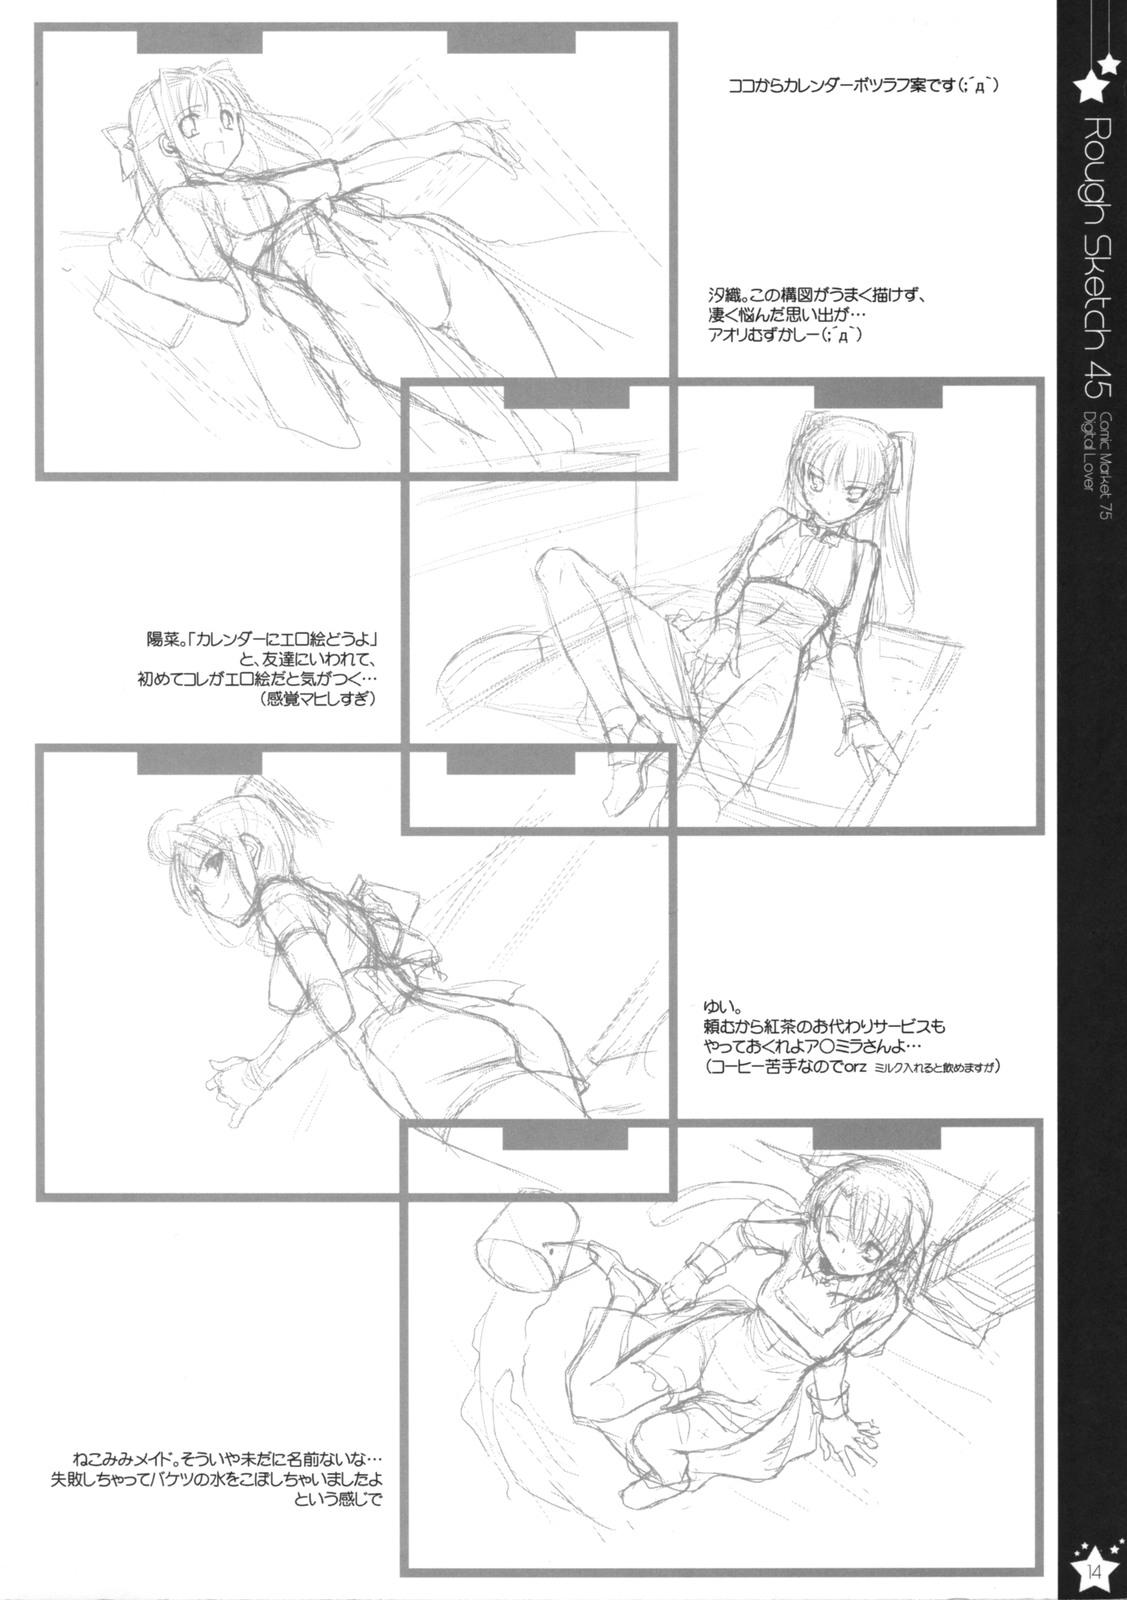 Public Nudity Rough Sketch 45 - Toaru majutsu no index Kannagi Toradora Panties - Page 14